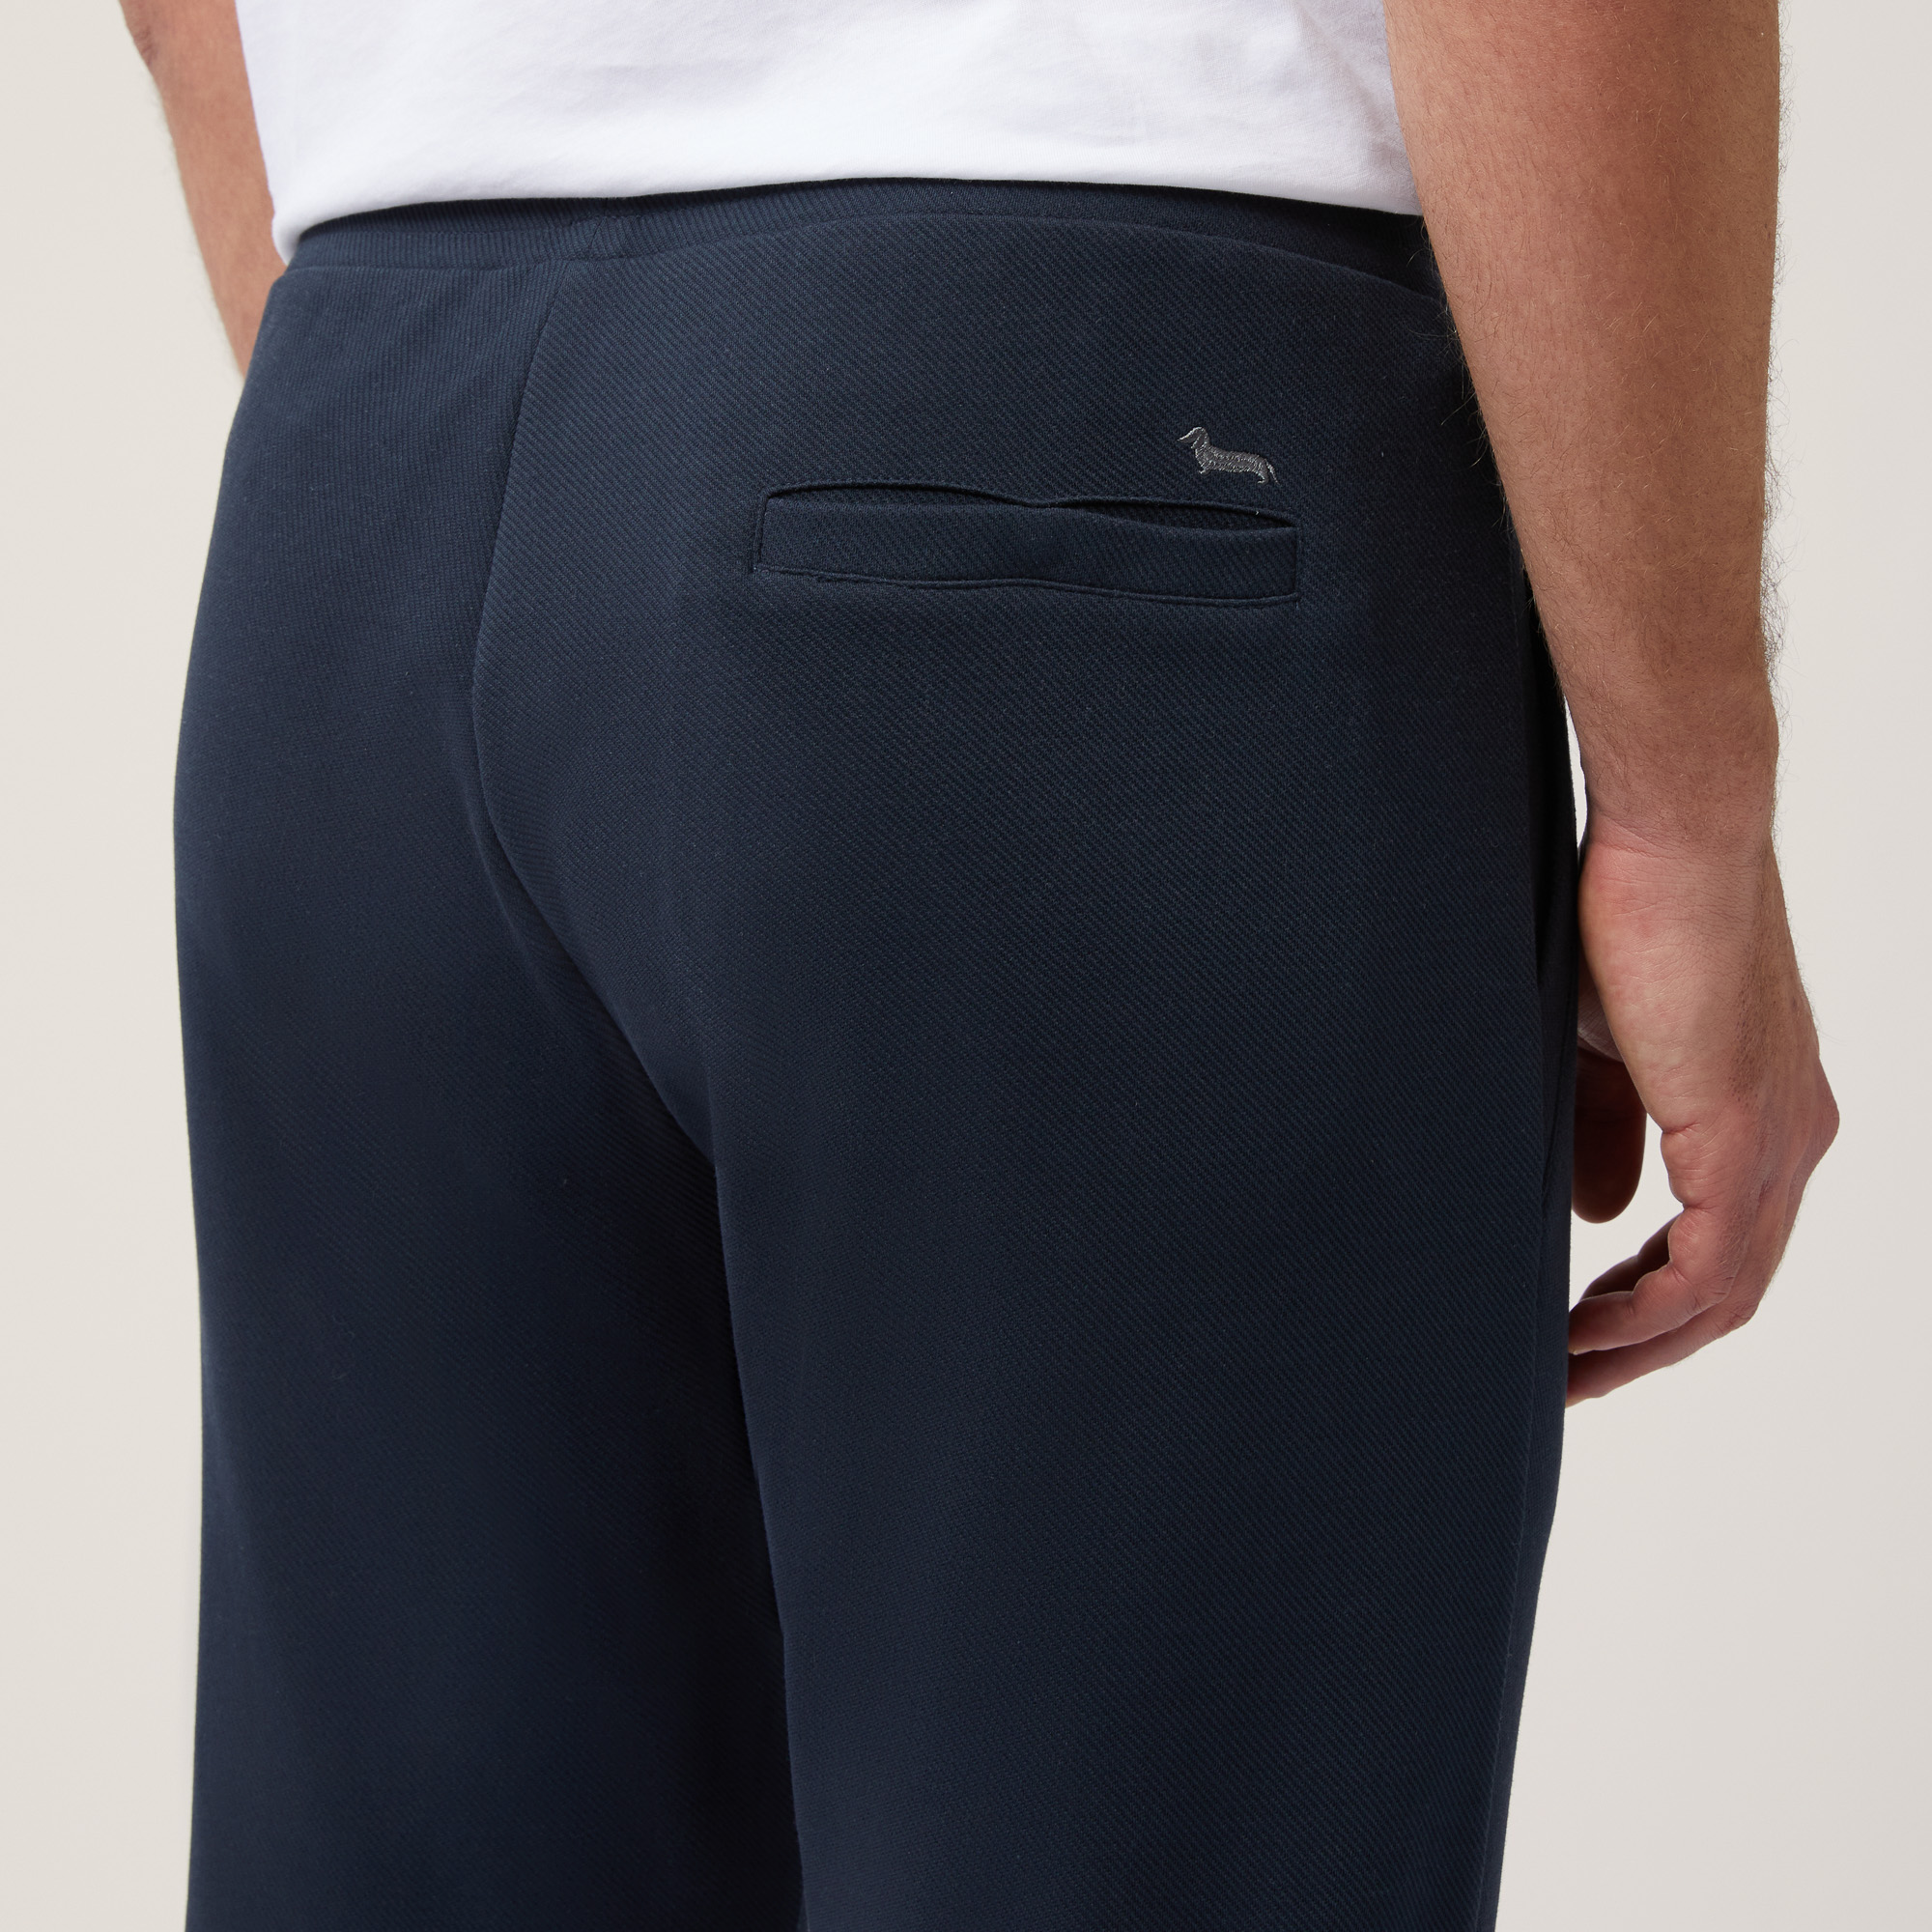 Pantalón de algodón elástico con bolsillo trasero, Azul, large image number 2